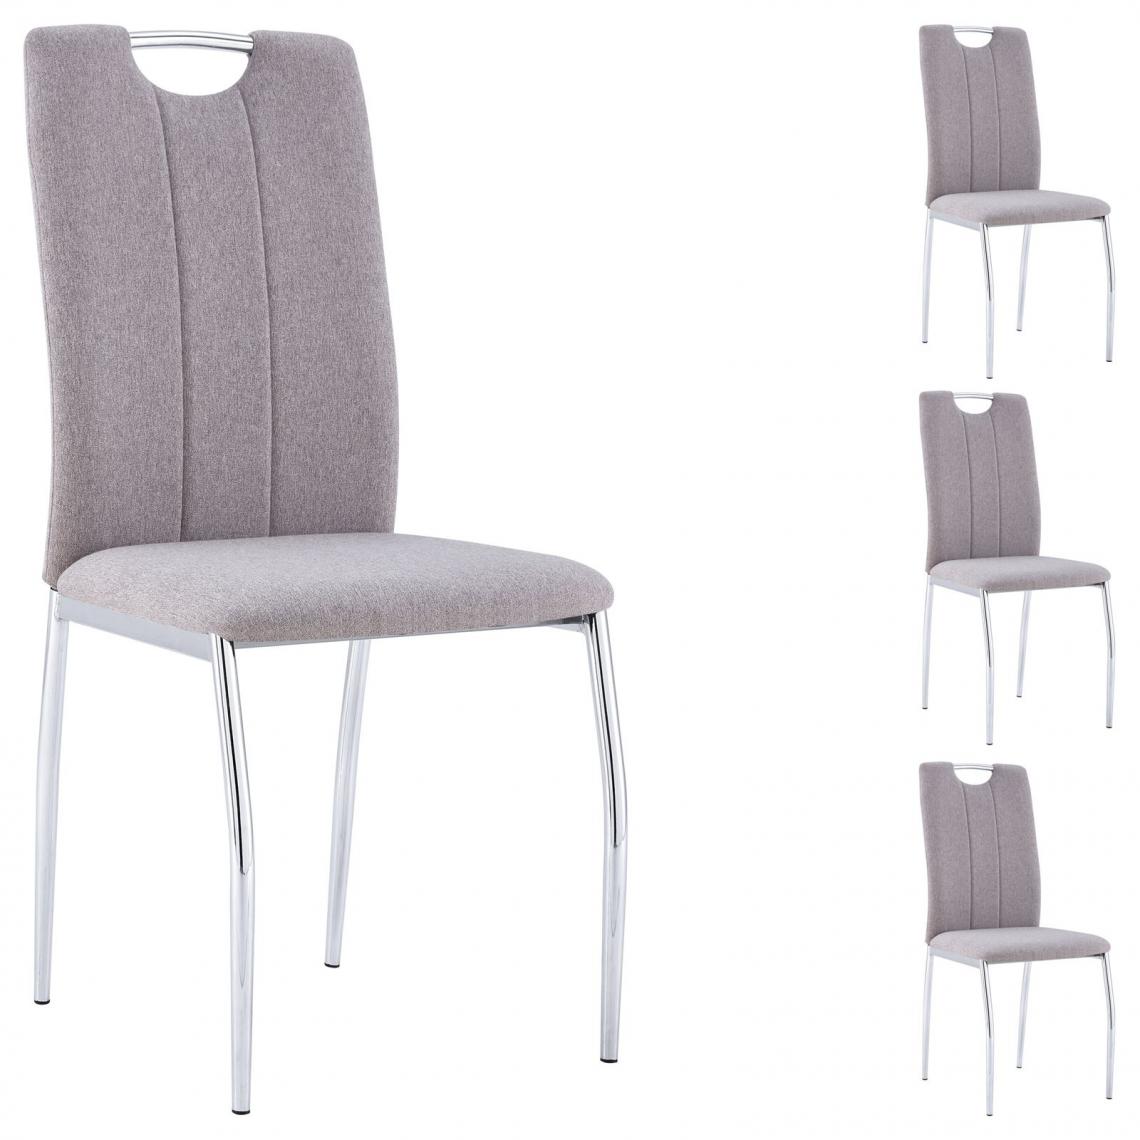 Idimex - Lot de 4 chaises APOLLO, en tissu gris - Chaises